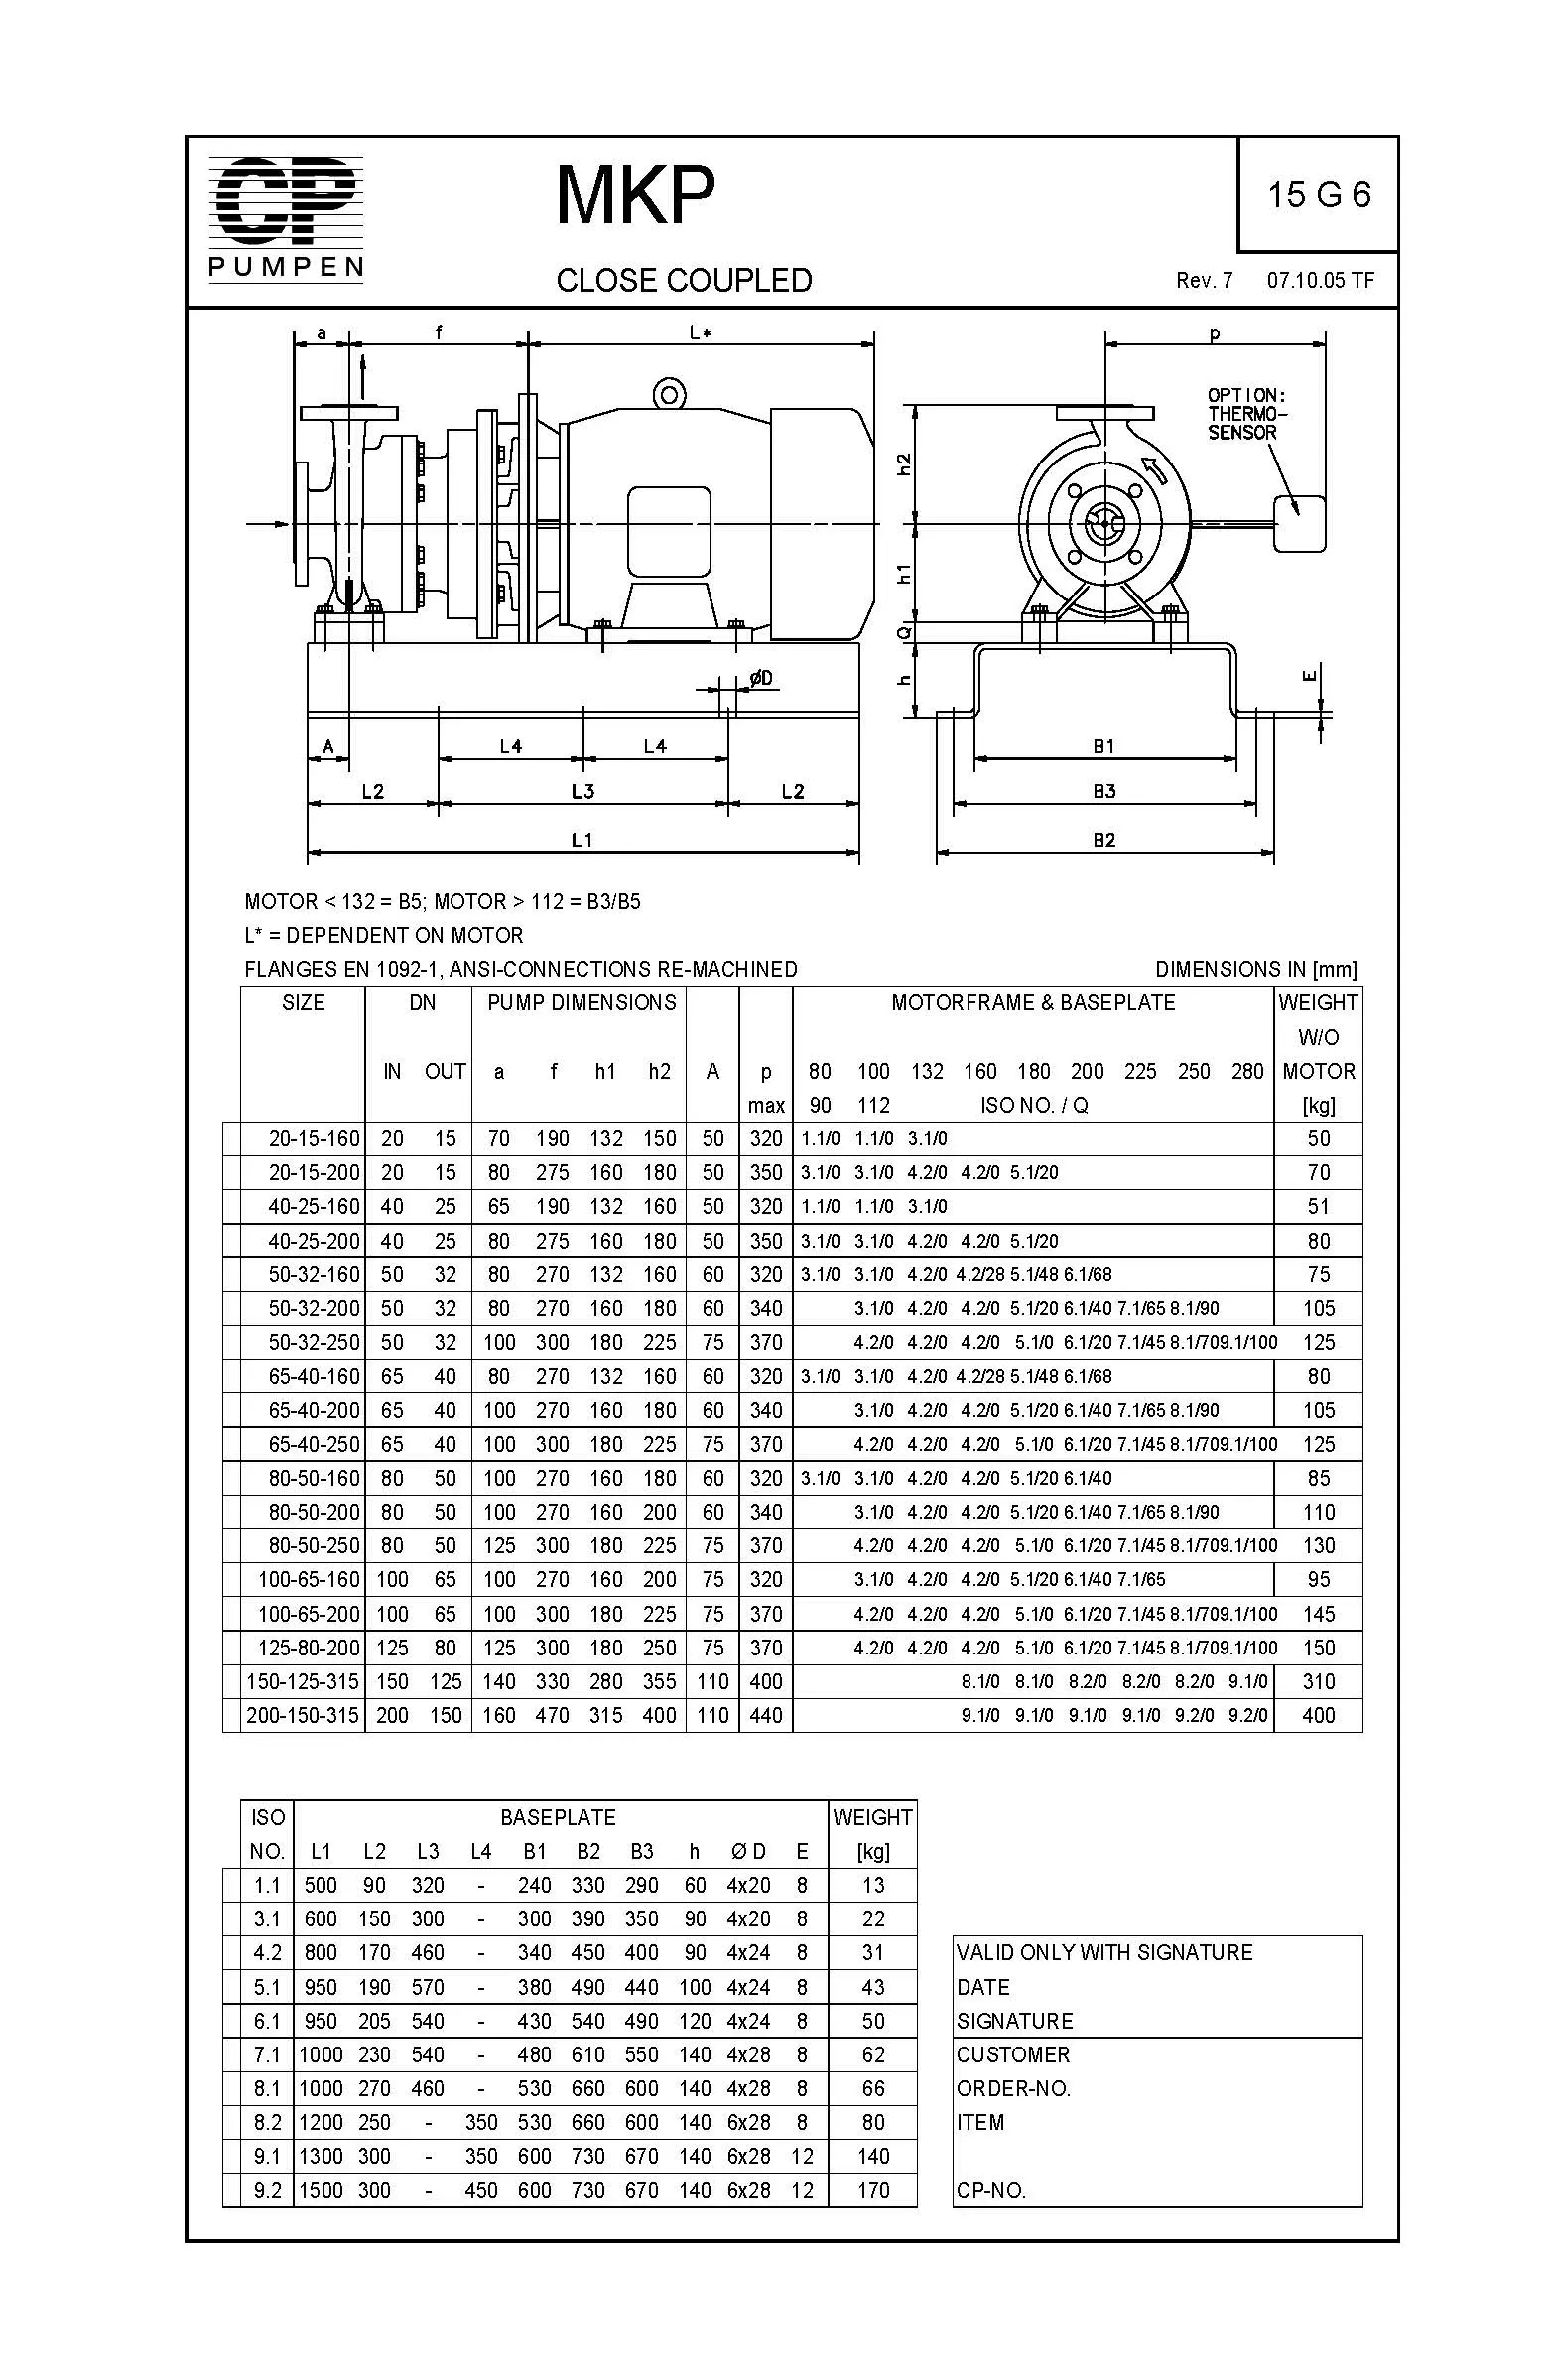 DimensionalDrawing MKP CloseCoupled I-04 Baseplate Motor 15G6 Rev07